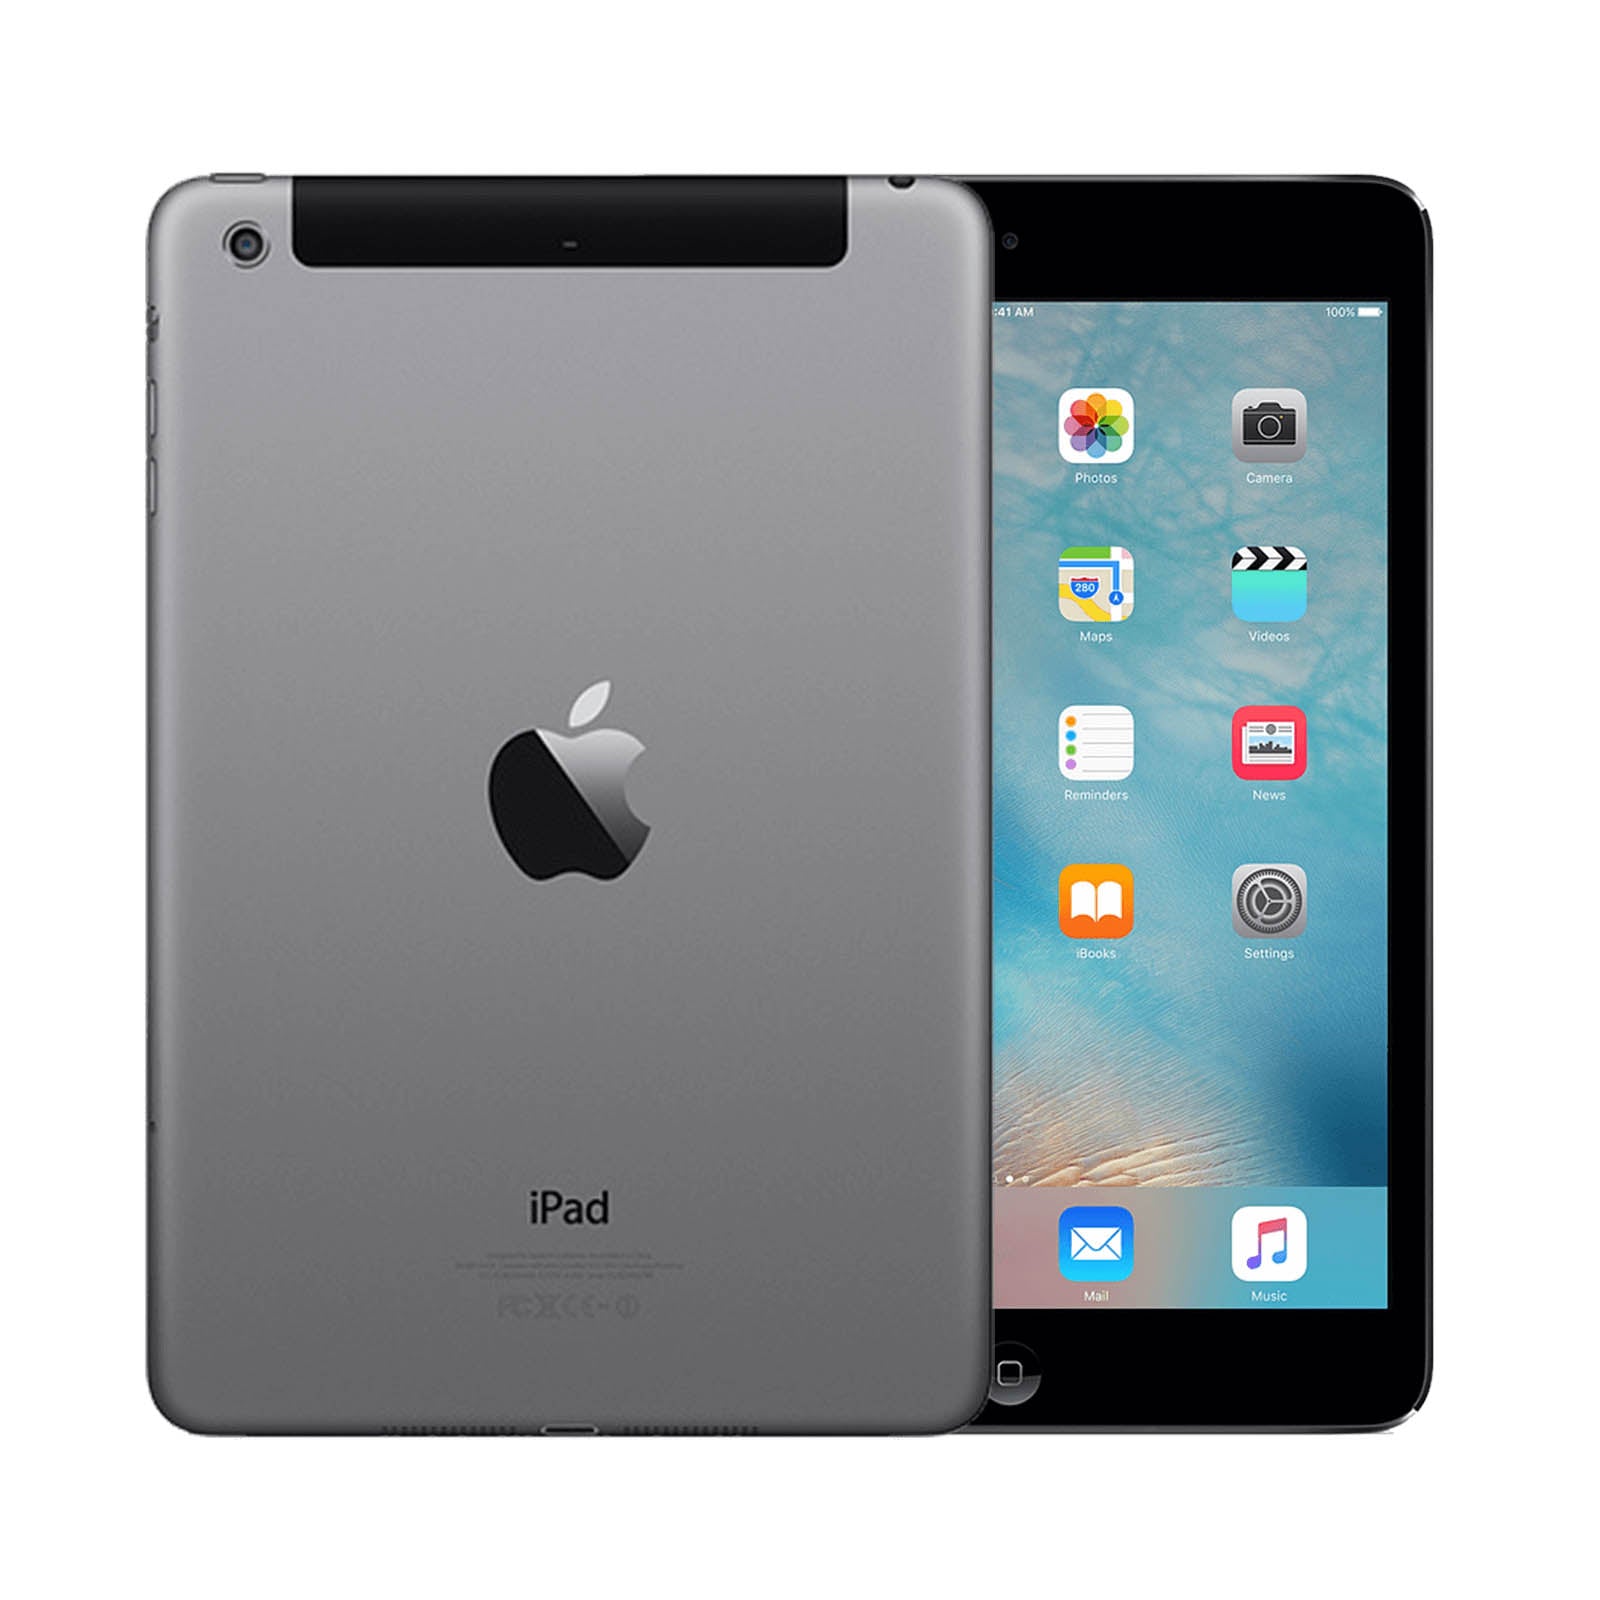 Apple iPad mini 3 16GB Space Grey Very Good- Unlocked